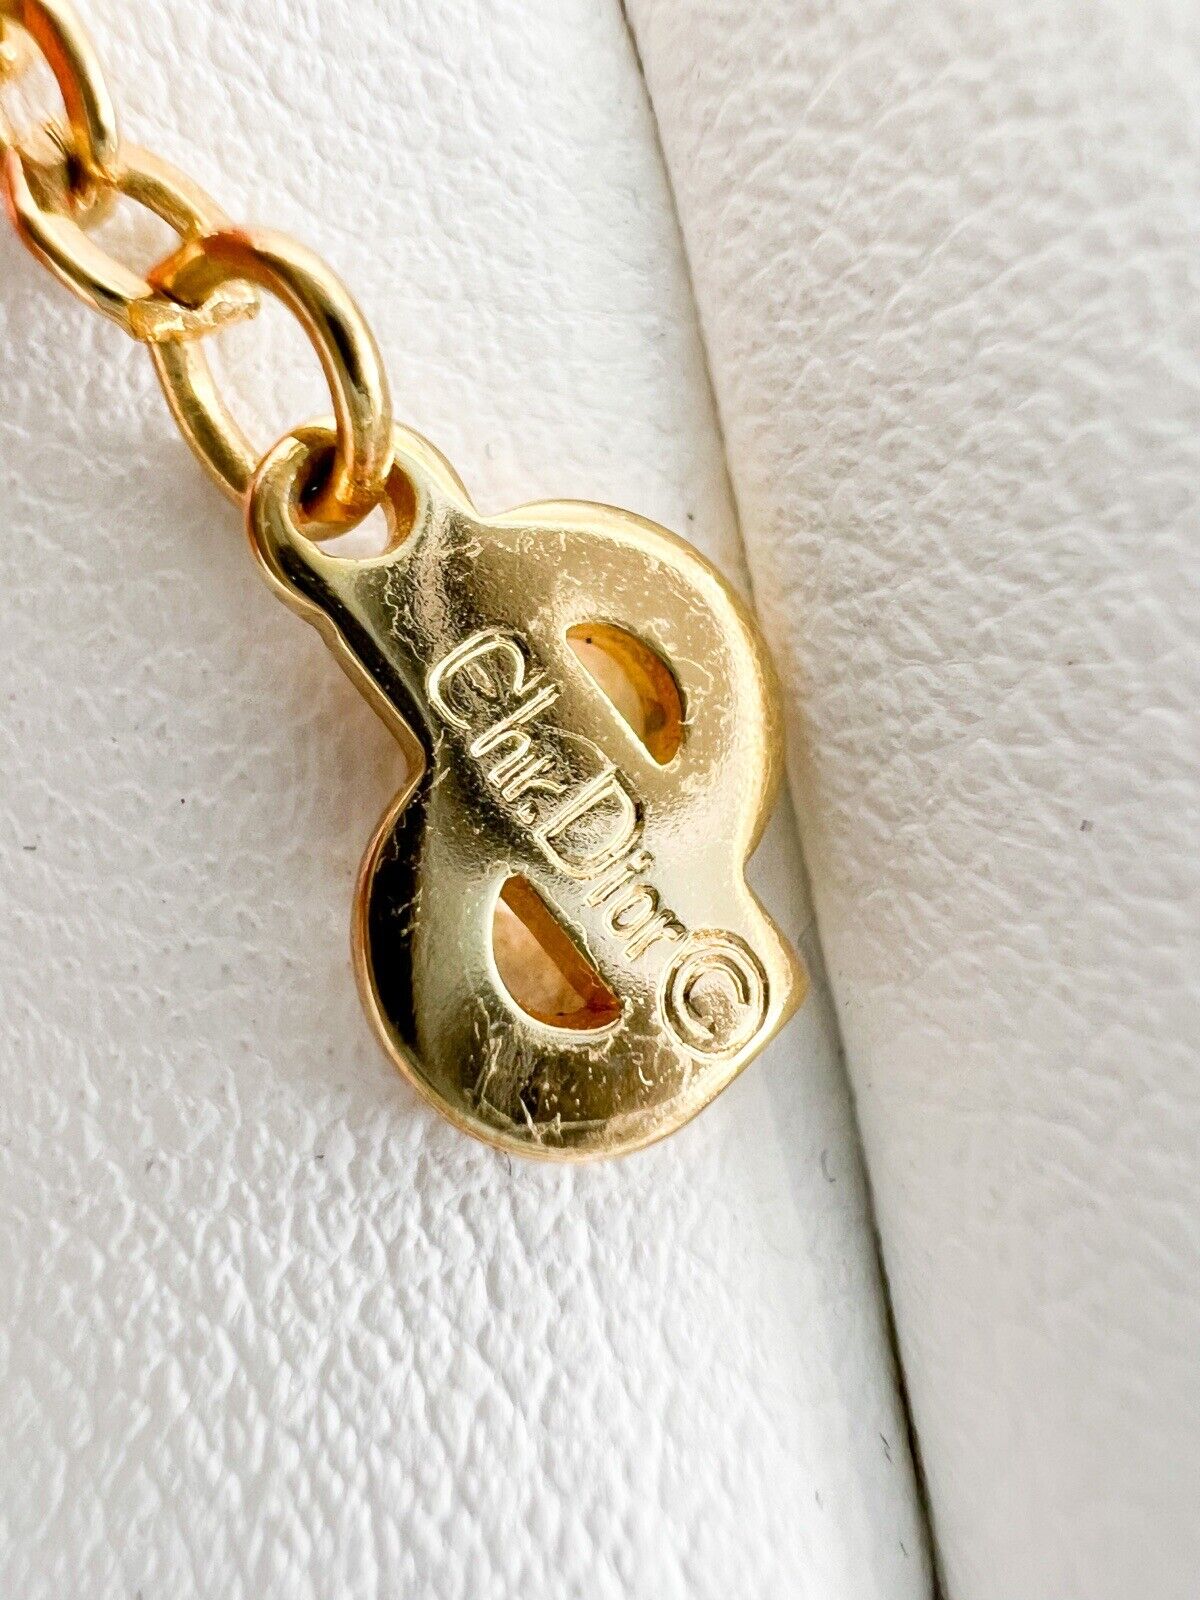 Vintage Christian Dior Necklace, Choker Necklace Gold, Vintage Leaf necklace, Bridal Necklace, Charm Necklace, Vintage Rhinestone